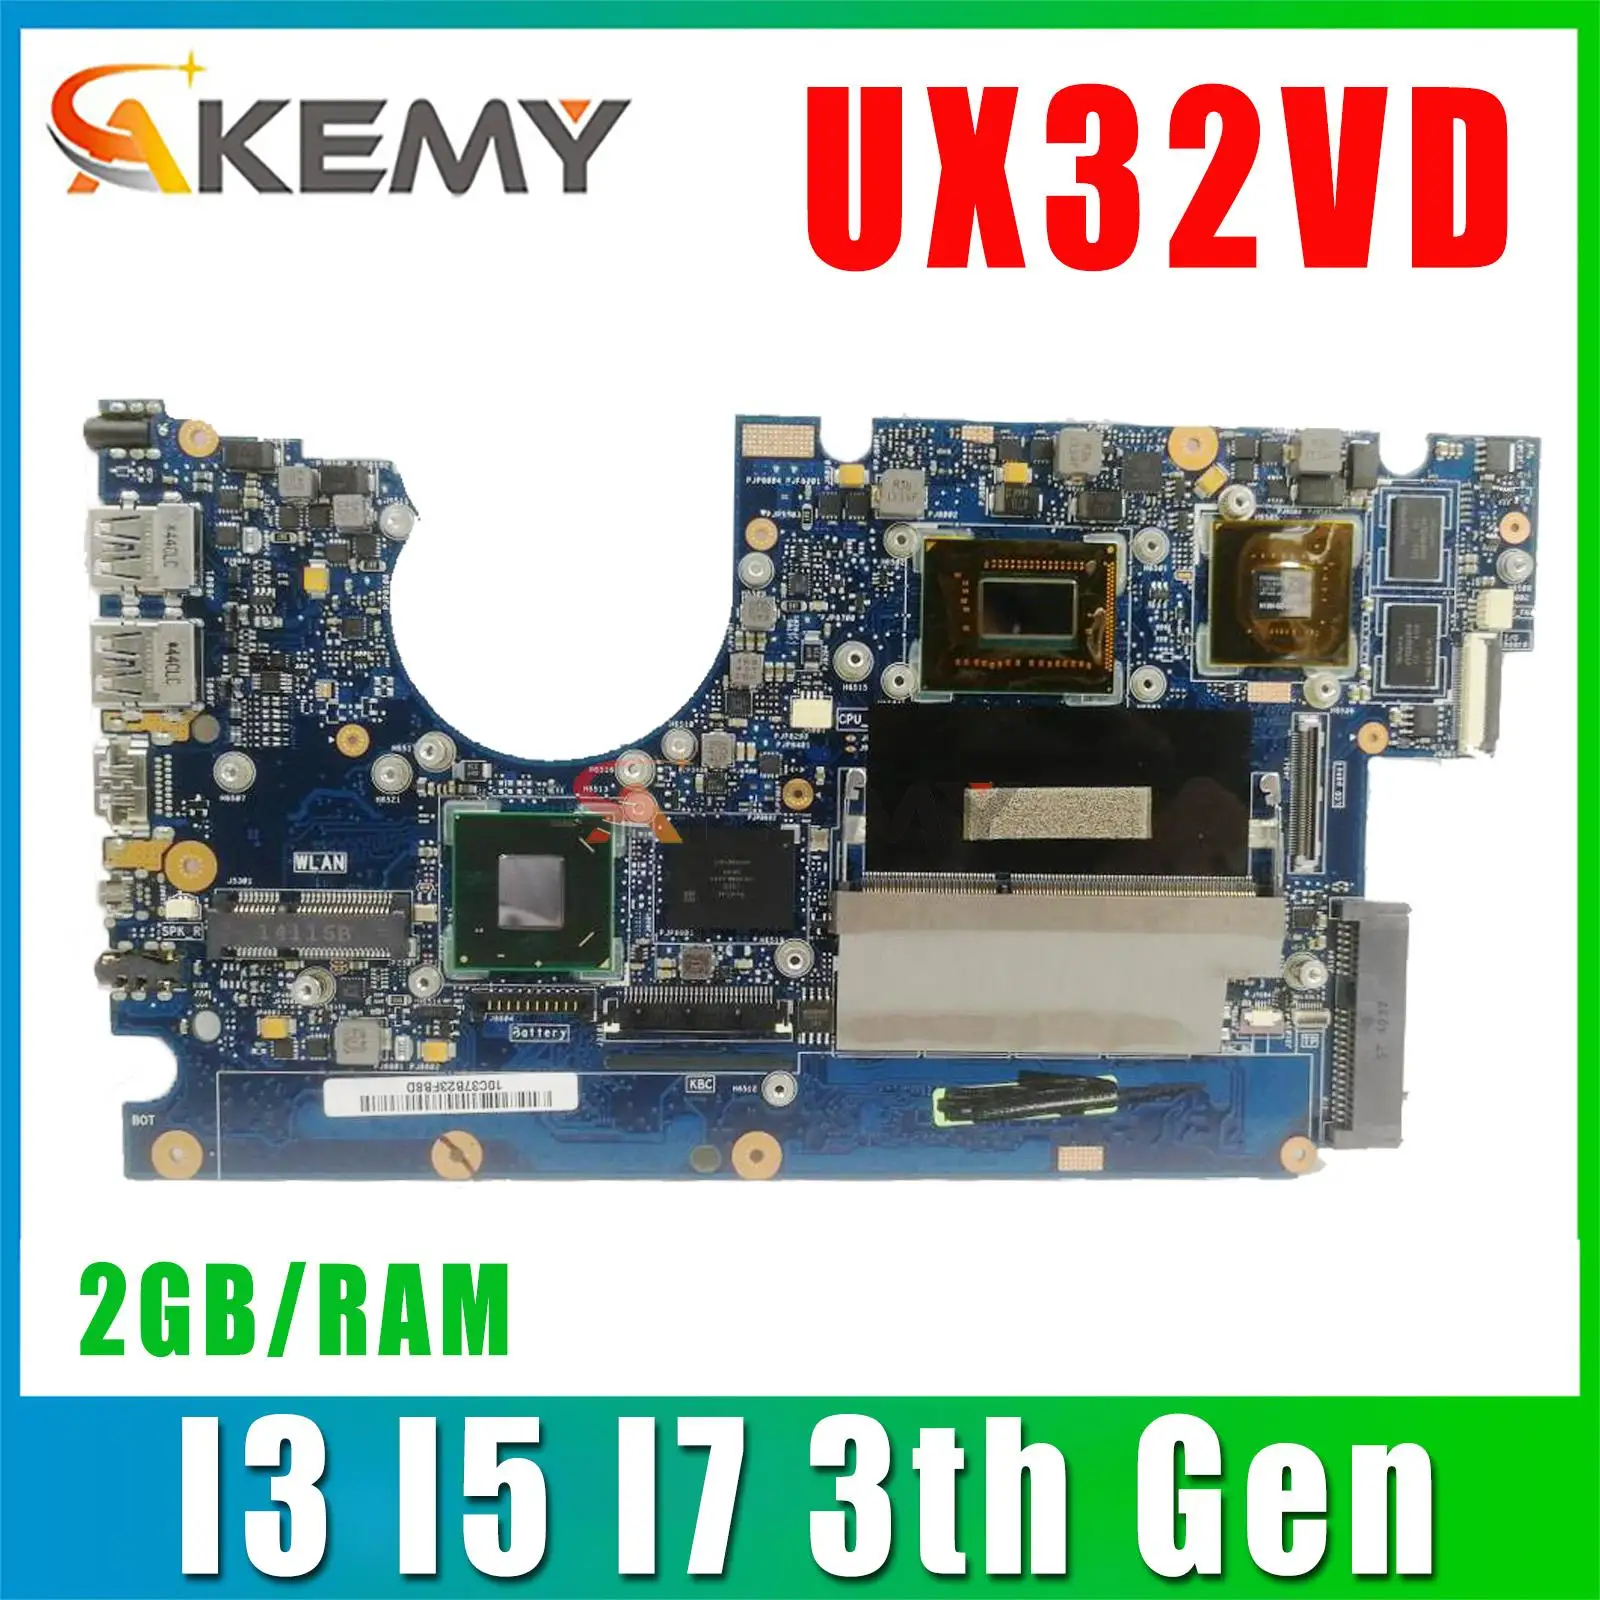 

UX32VD Mainboard For ASUS Zenbook BX32VD UX32A UX32V UX32 Laptop Motherboard I3 I5 I7 3TH 2GB/RAM UMA/GT620M